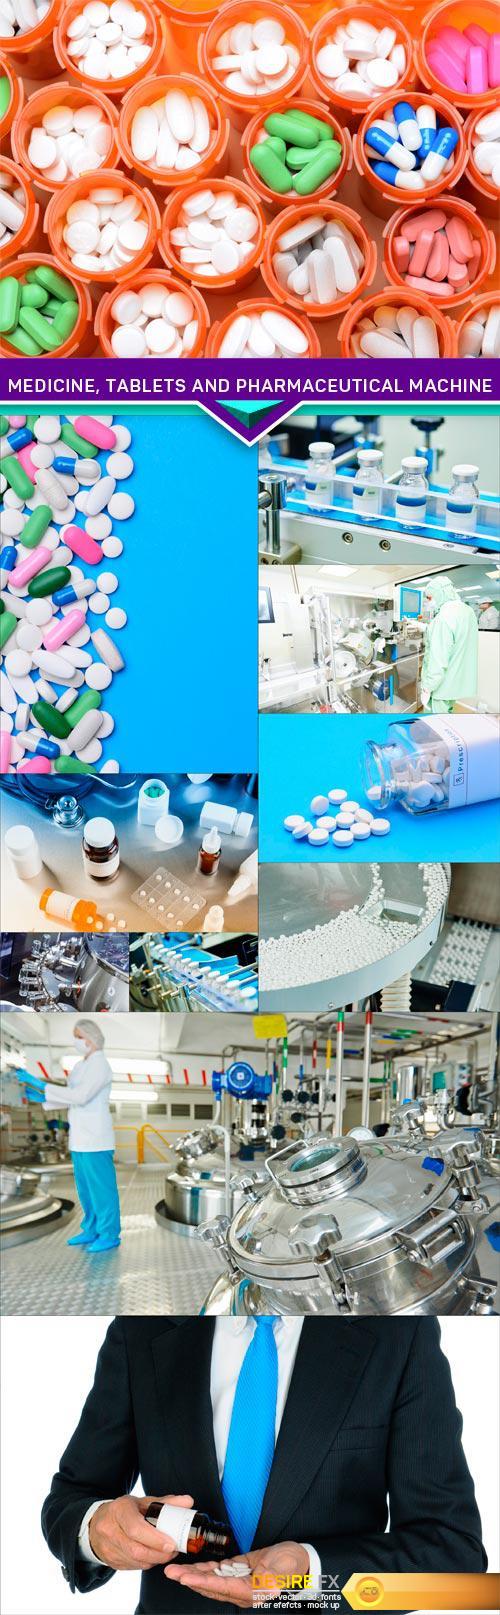 Medicine, tablets and pharmaceutical machine 11X JPEG